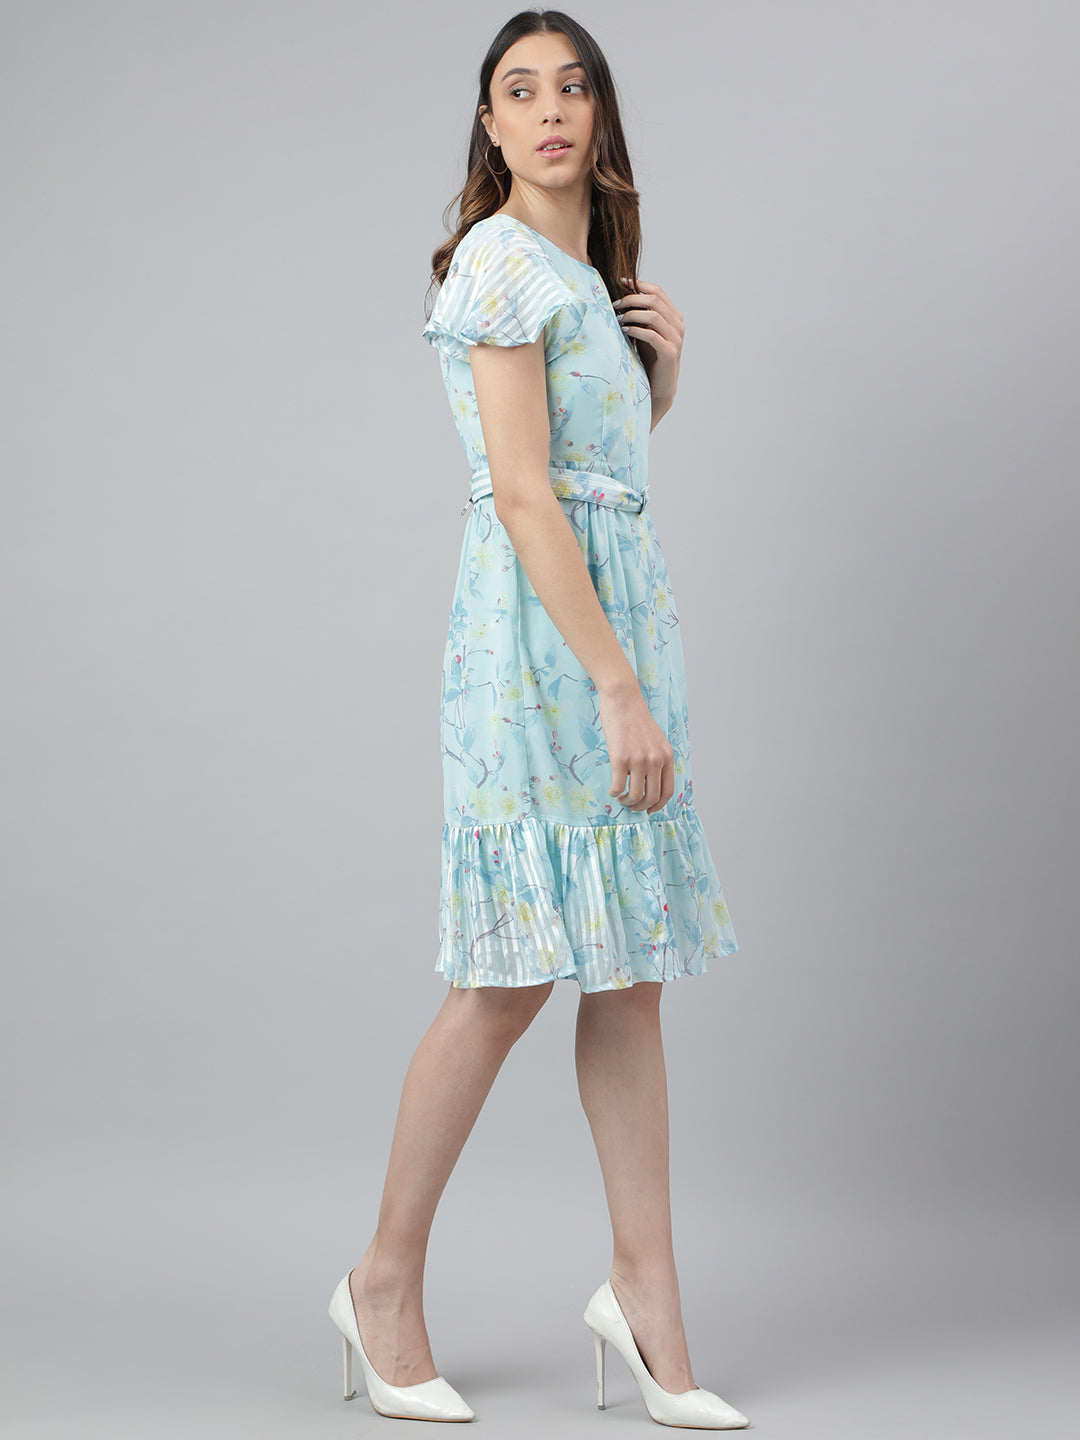 Blue Cap Sleeve Round Neck Floral Print Shift Dress for Women